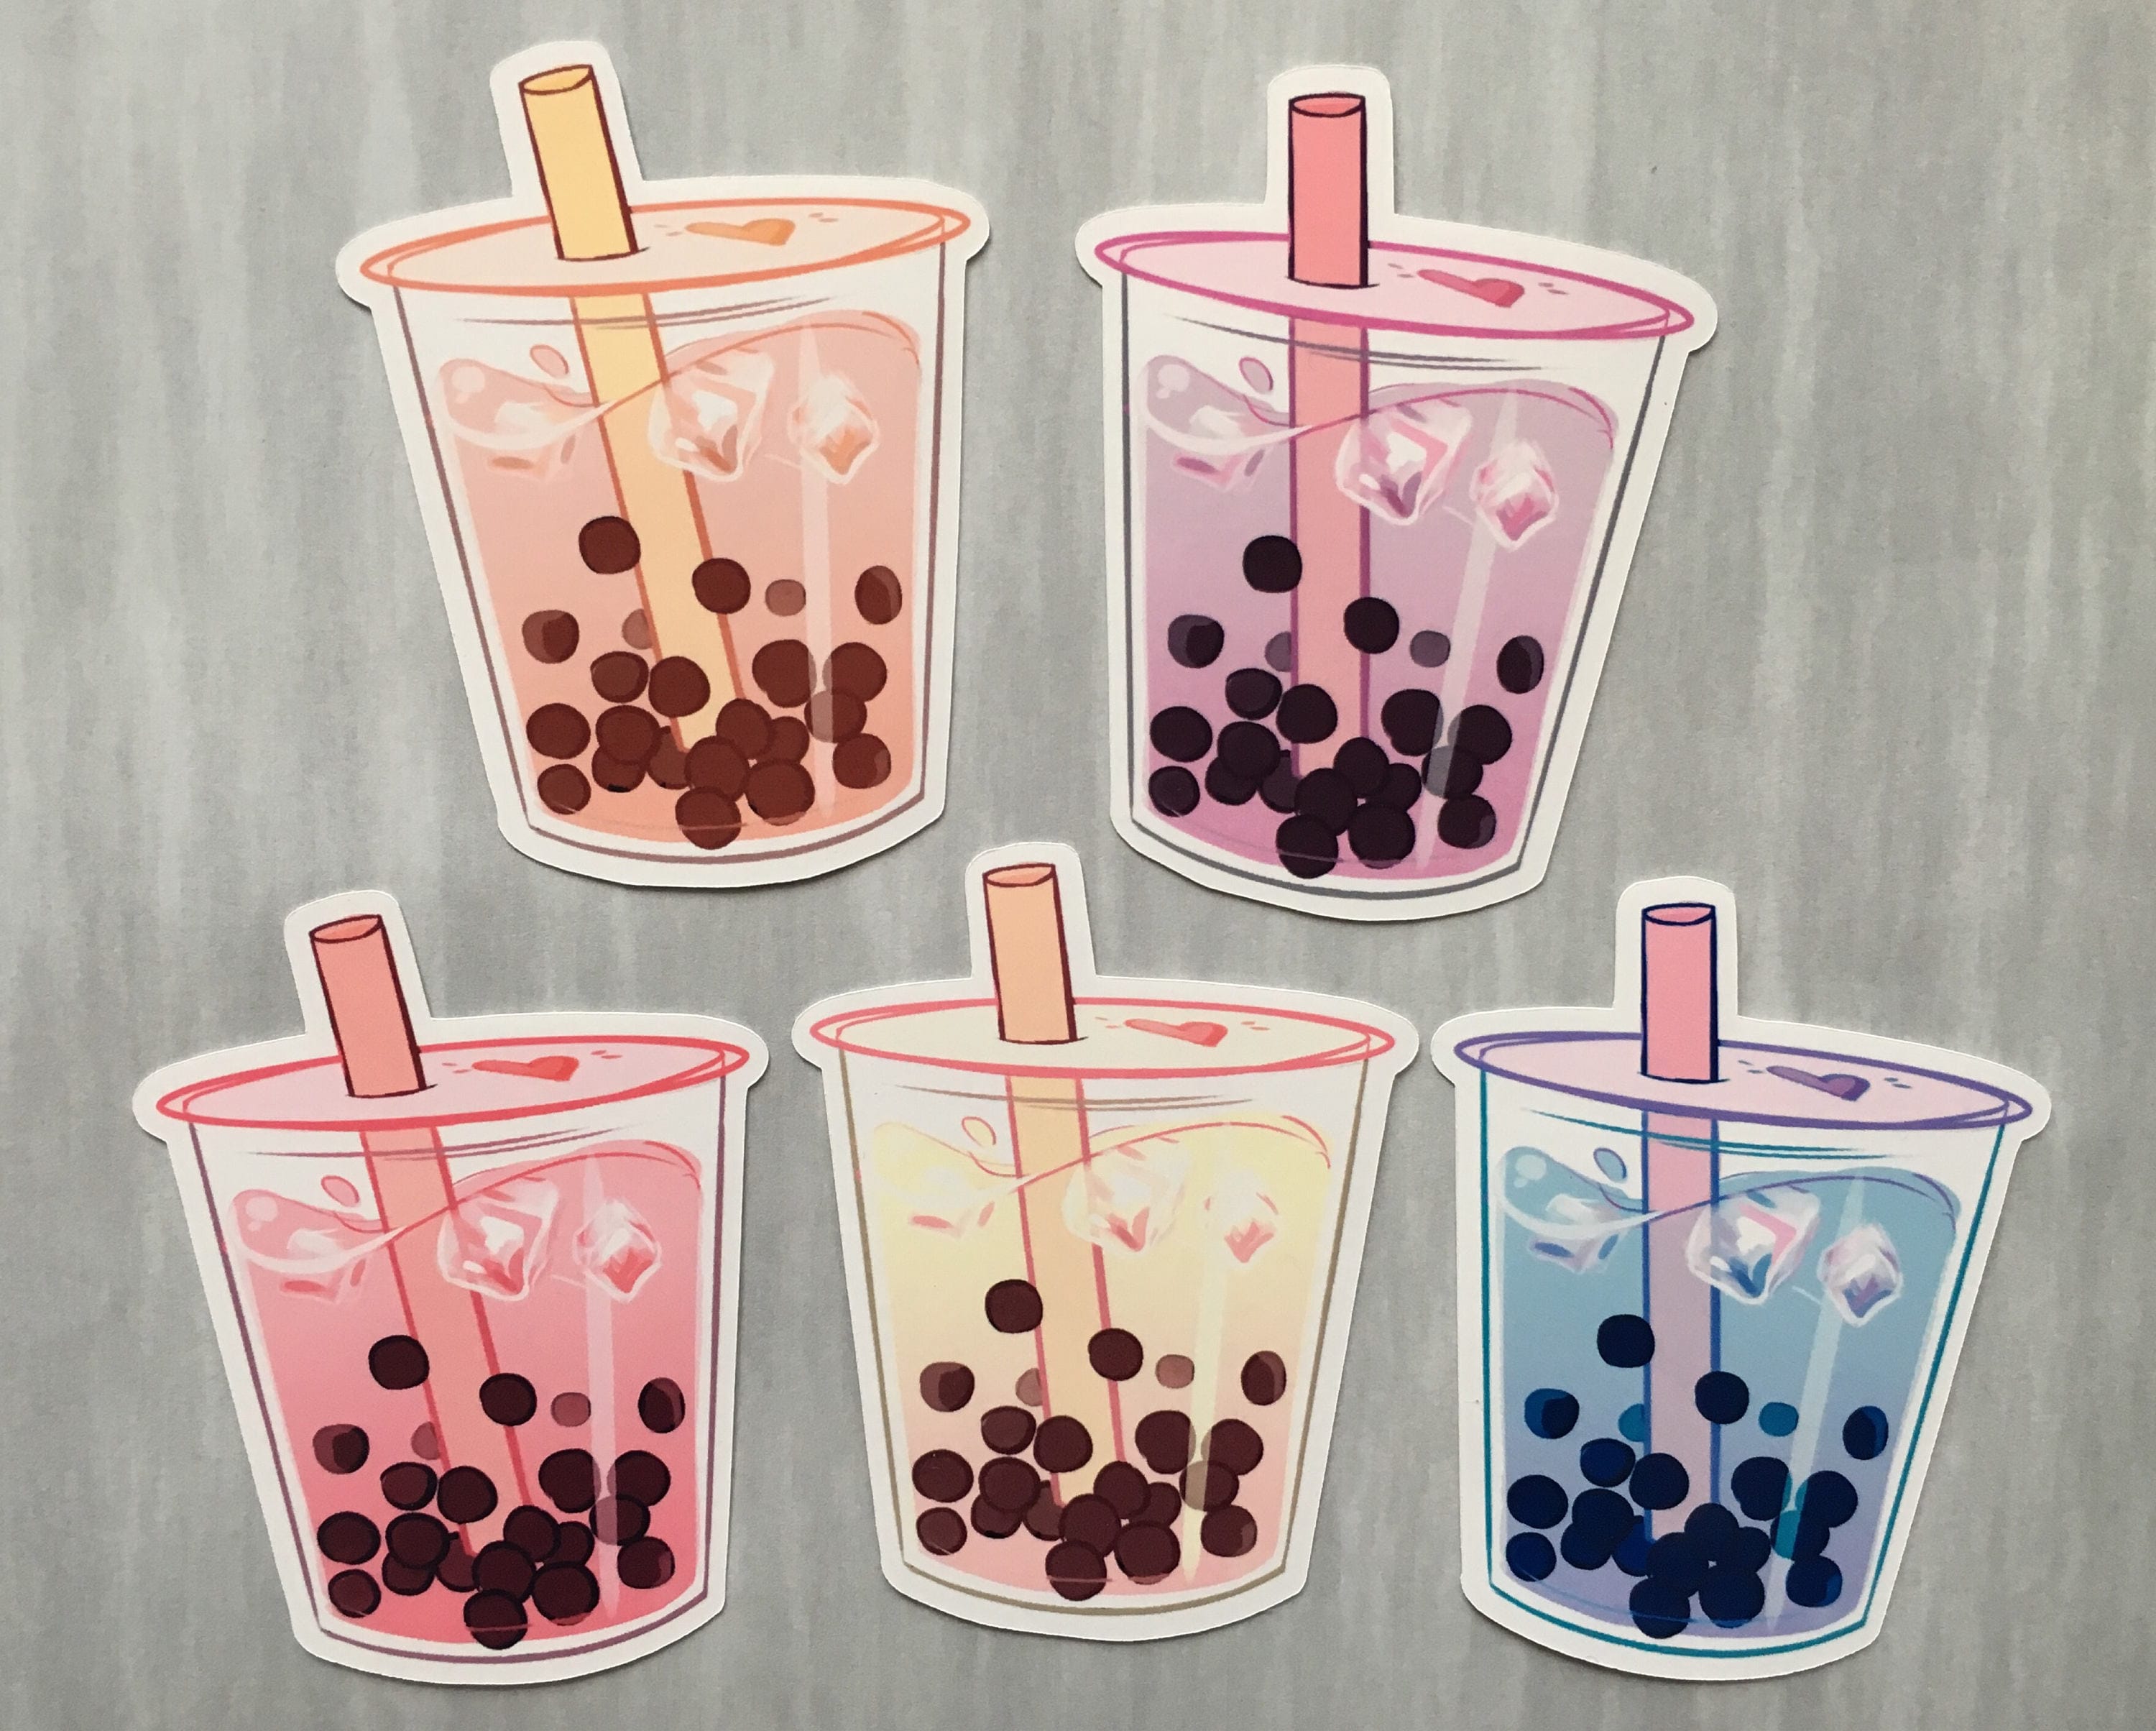  Aesthetic  Bubble Tea Boba sticker  set of 5 different colors